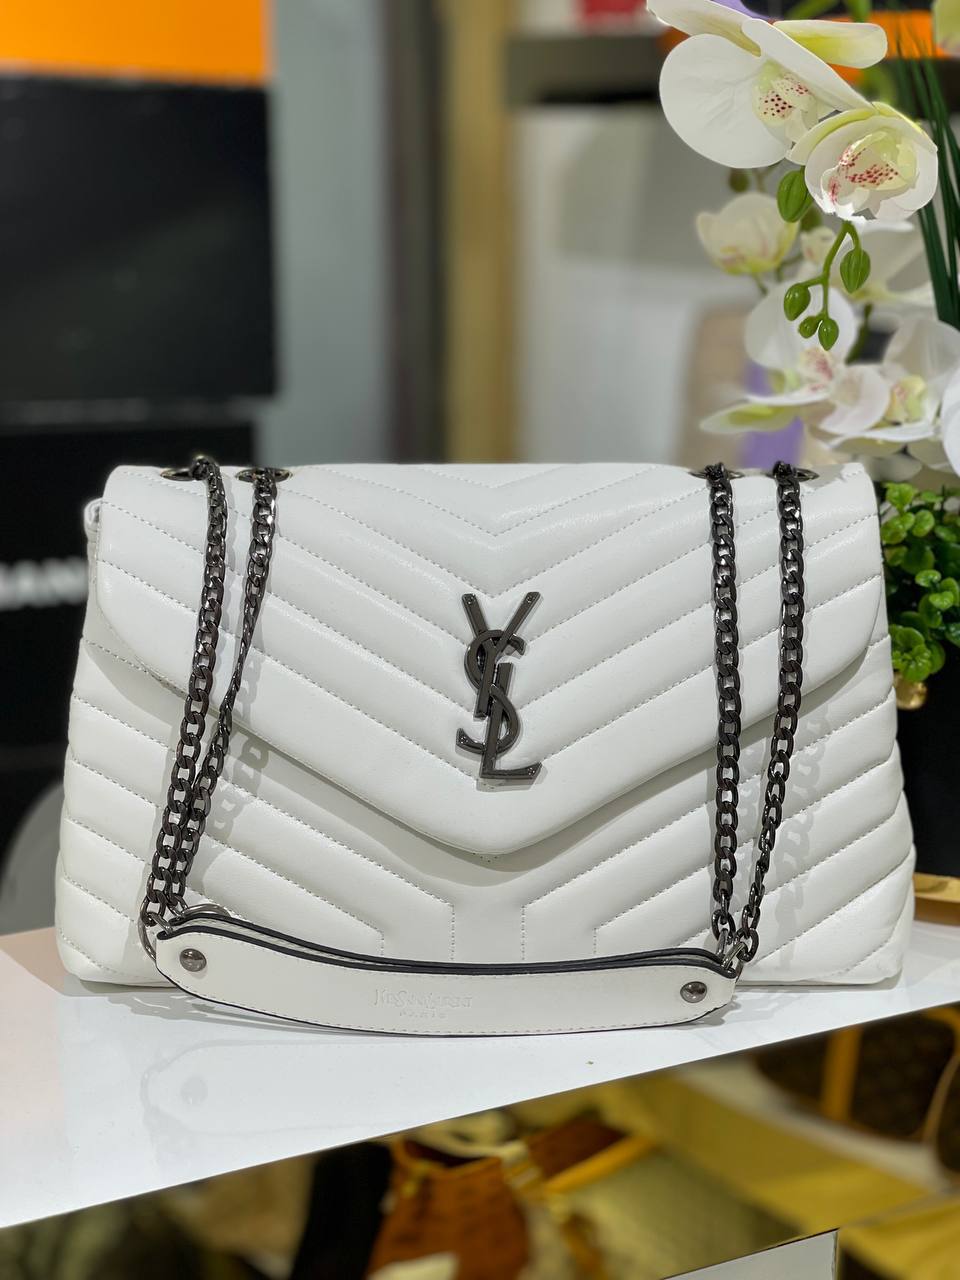 Yves saint Laurent handbags